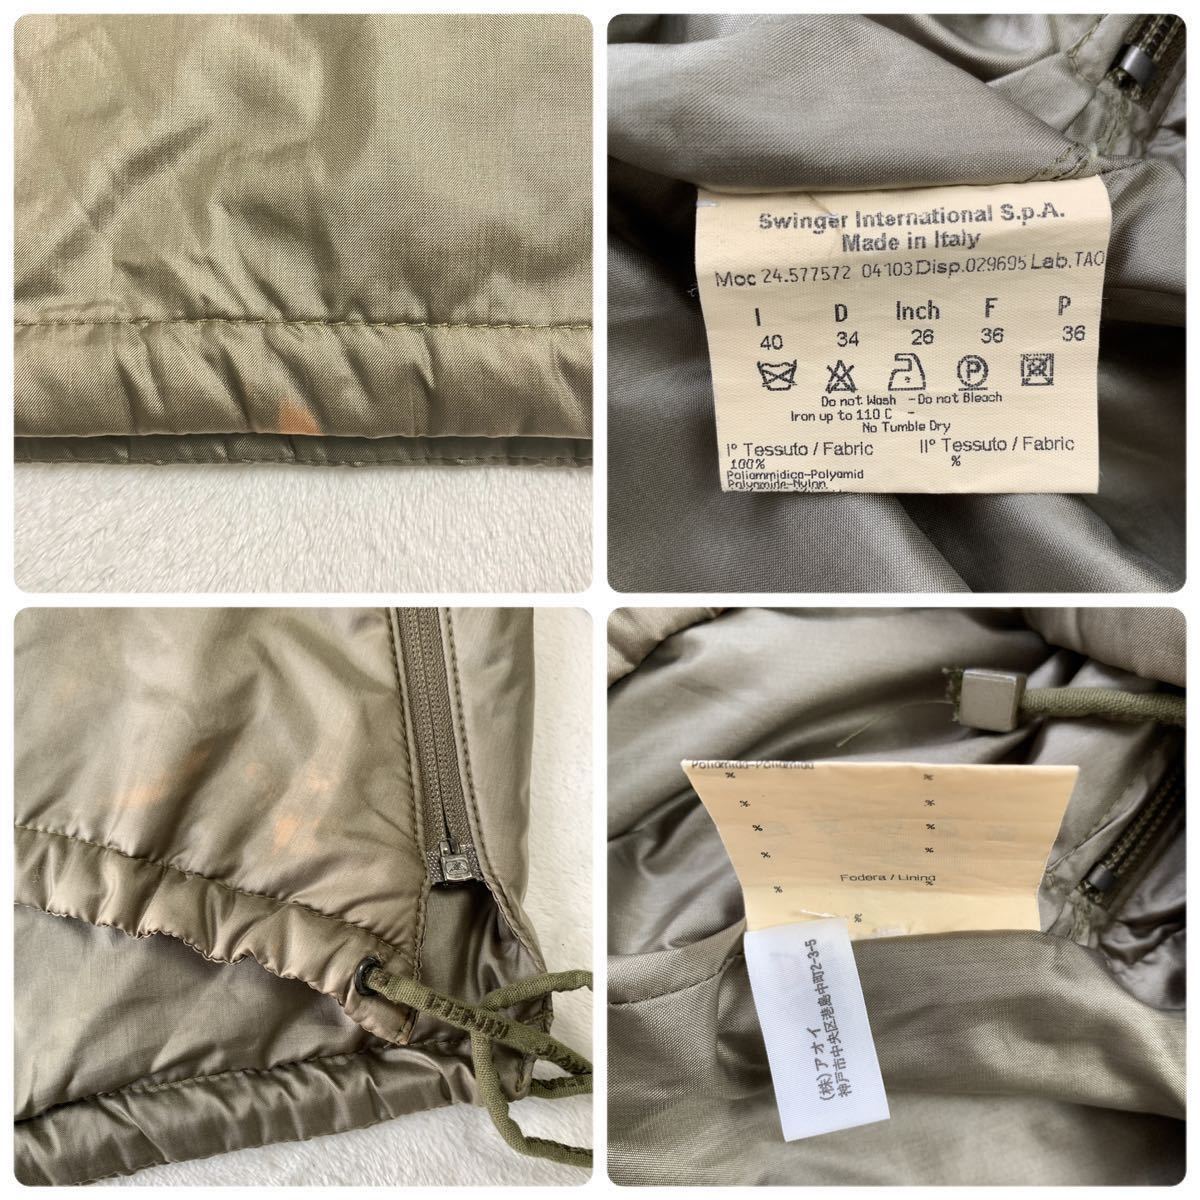 [ rare ]FENDI Fendi nylon ano rack jacket blouson cotton inside front both side zipper Italy made 